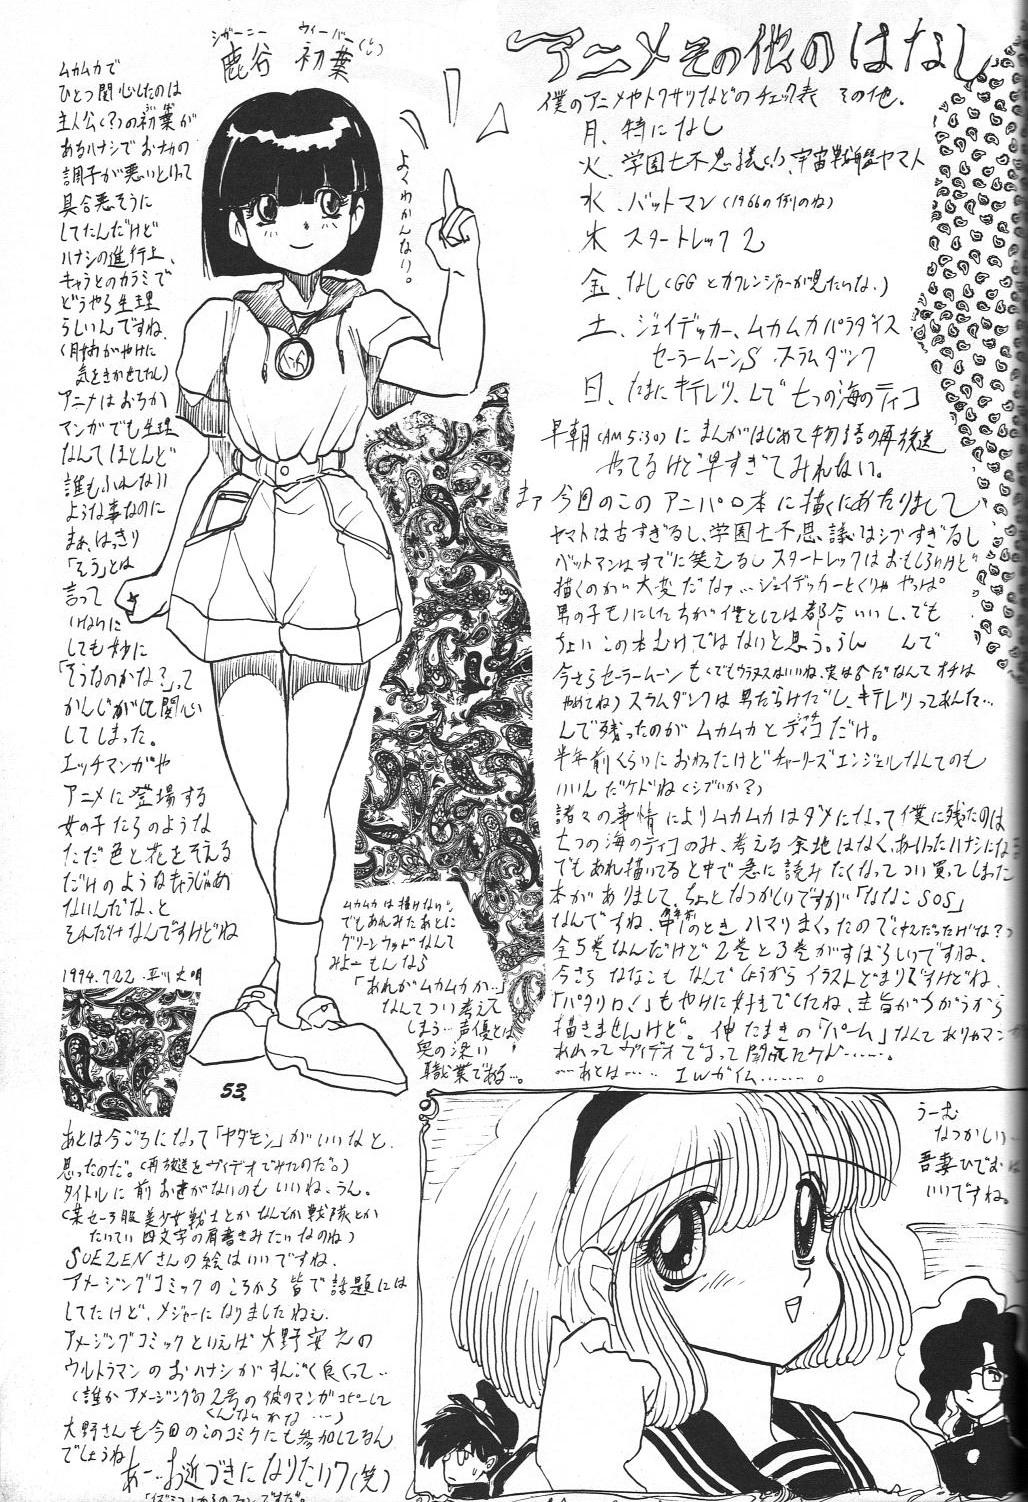 THE SECRET OF Chimatsuriya Vol. 8 51